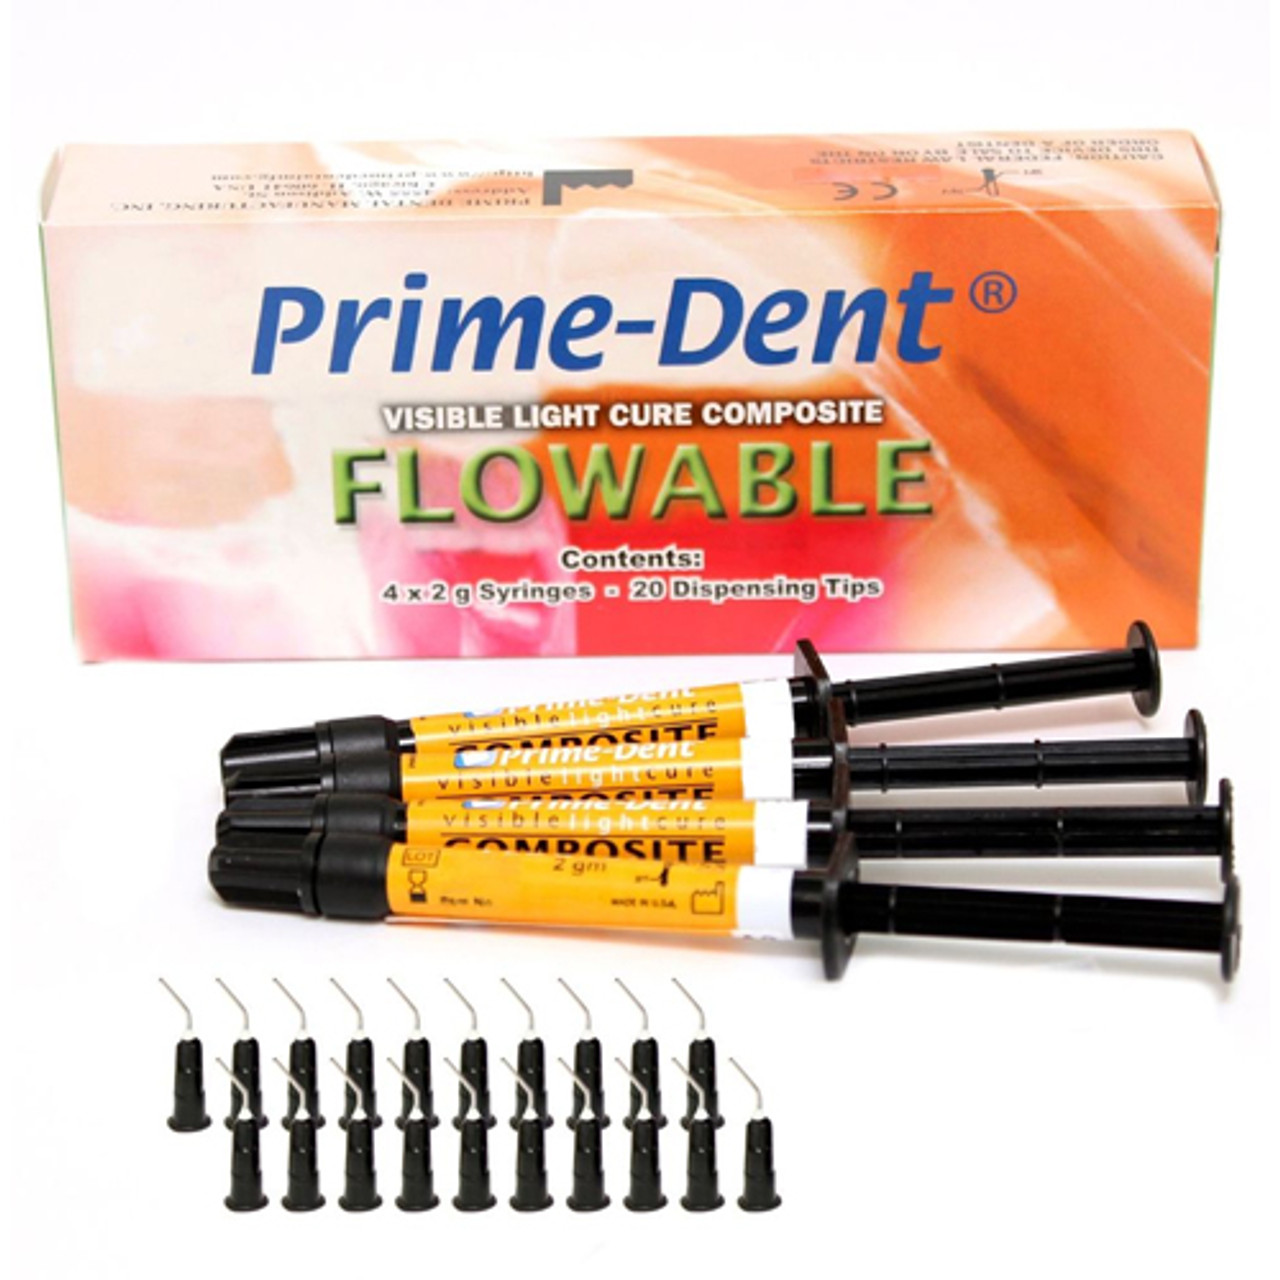 Prime-Dent Flowable Composite C3 - 4 Syringe Kit. VLC (Visible Light Cure)